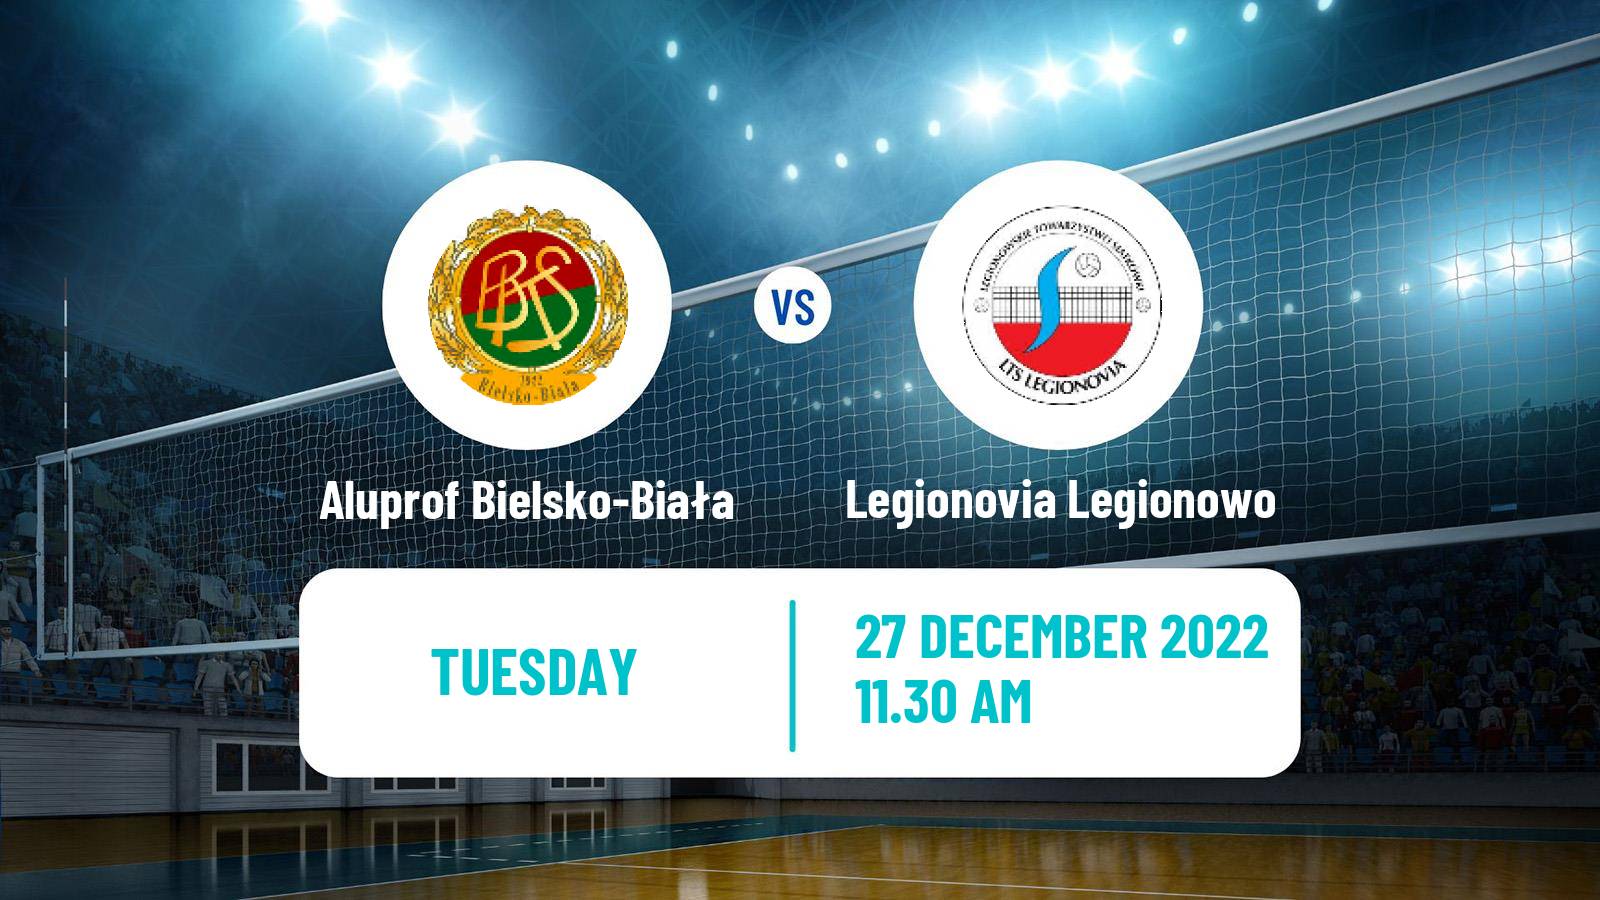 Volleyball Polish Liga Siatkowki Women Aluprof Bielsko-Biała - Legionovia Legionowo